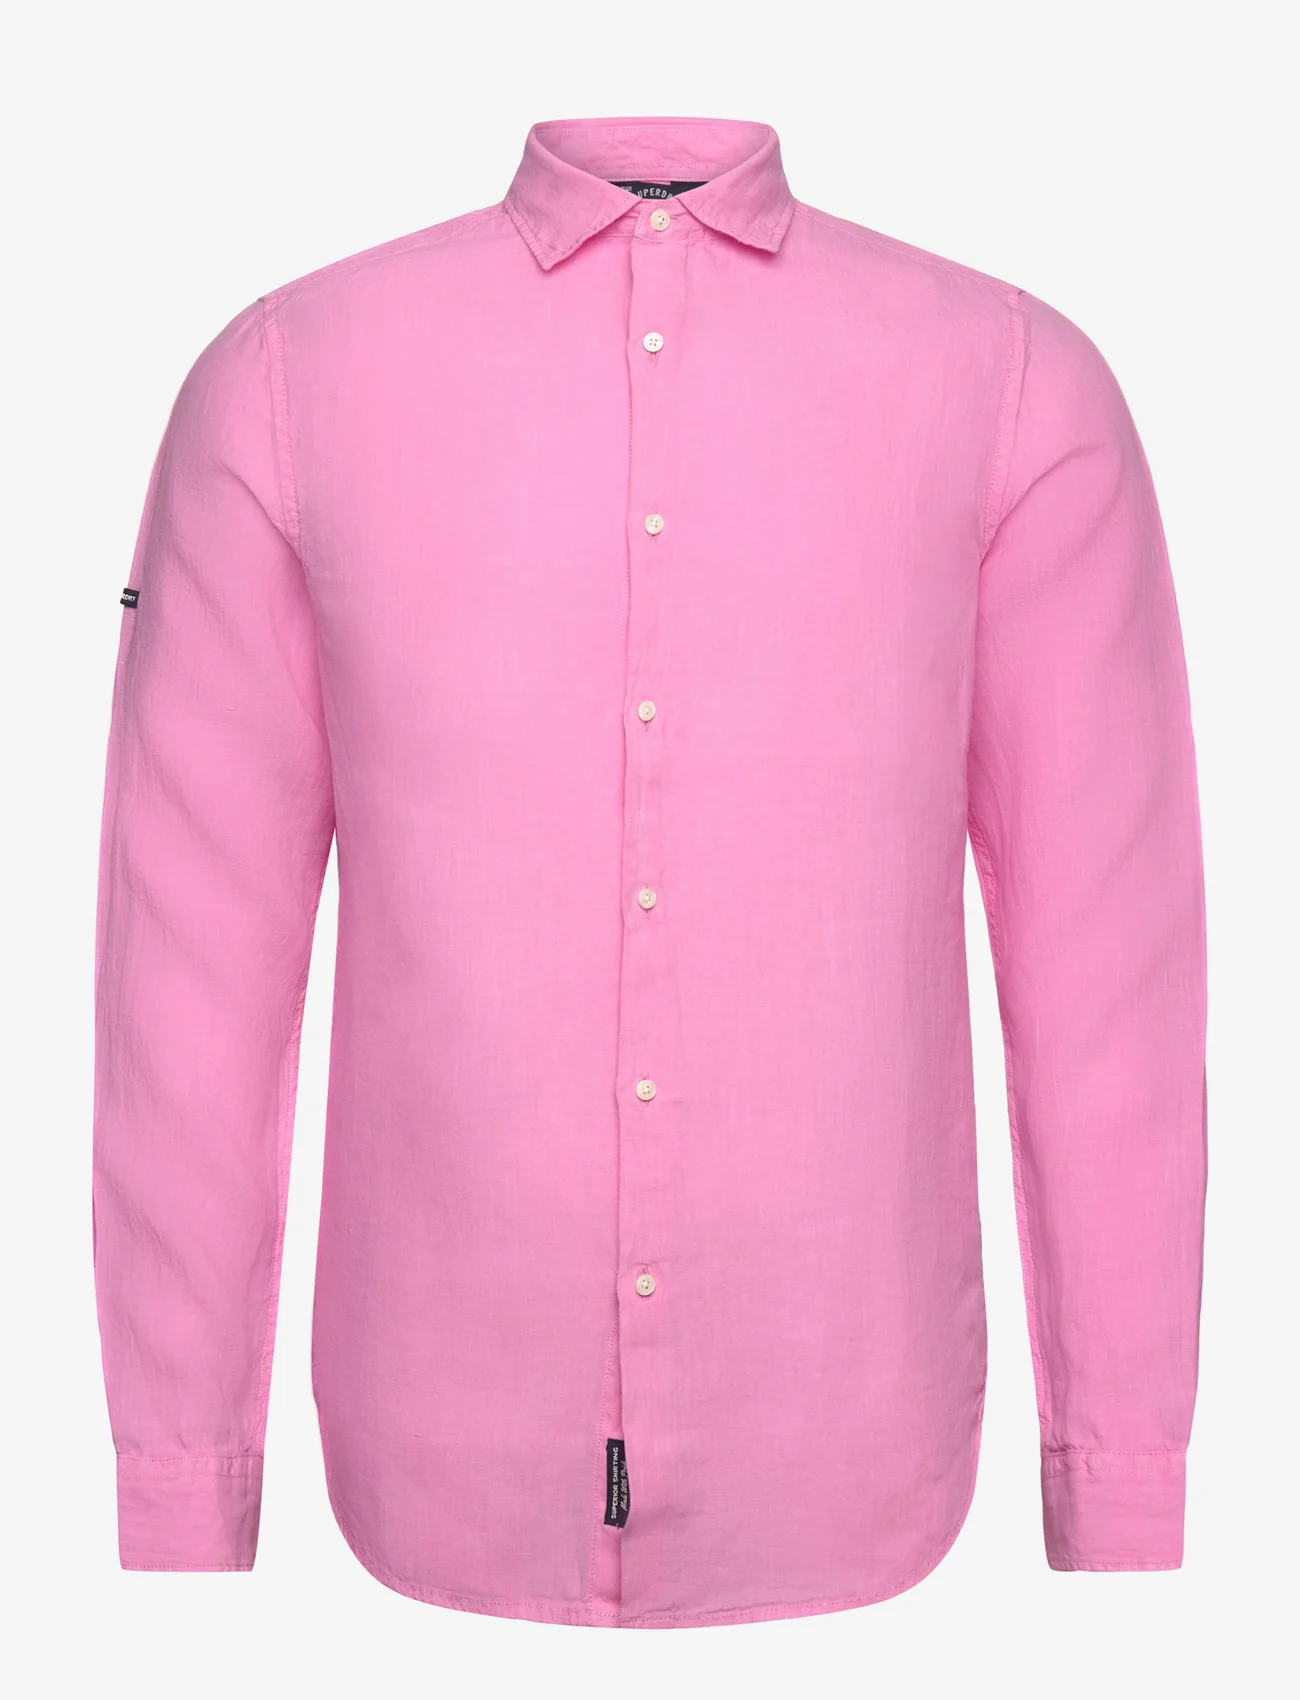 Superdry - STUDIOS CASUAL LINEN L/S SHIRT - linneskjortor - fuchsia pink - 0